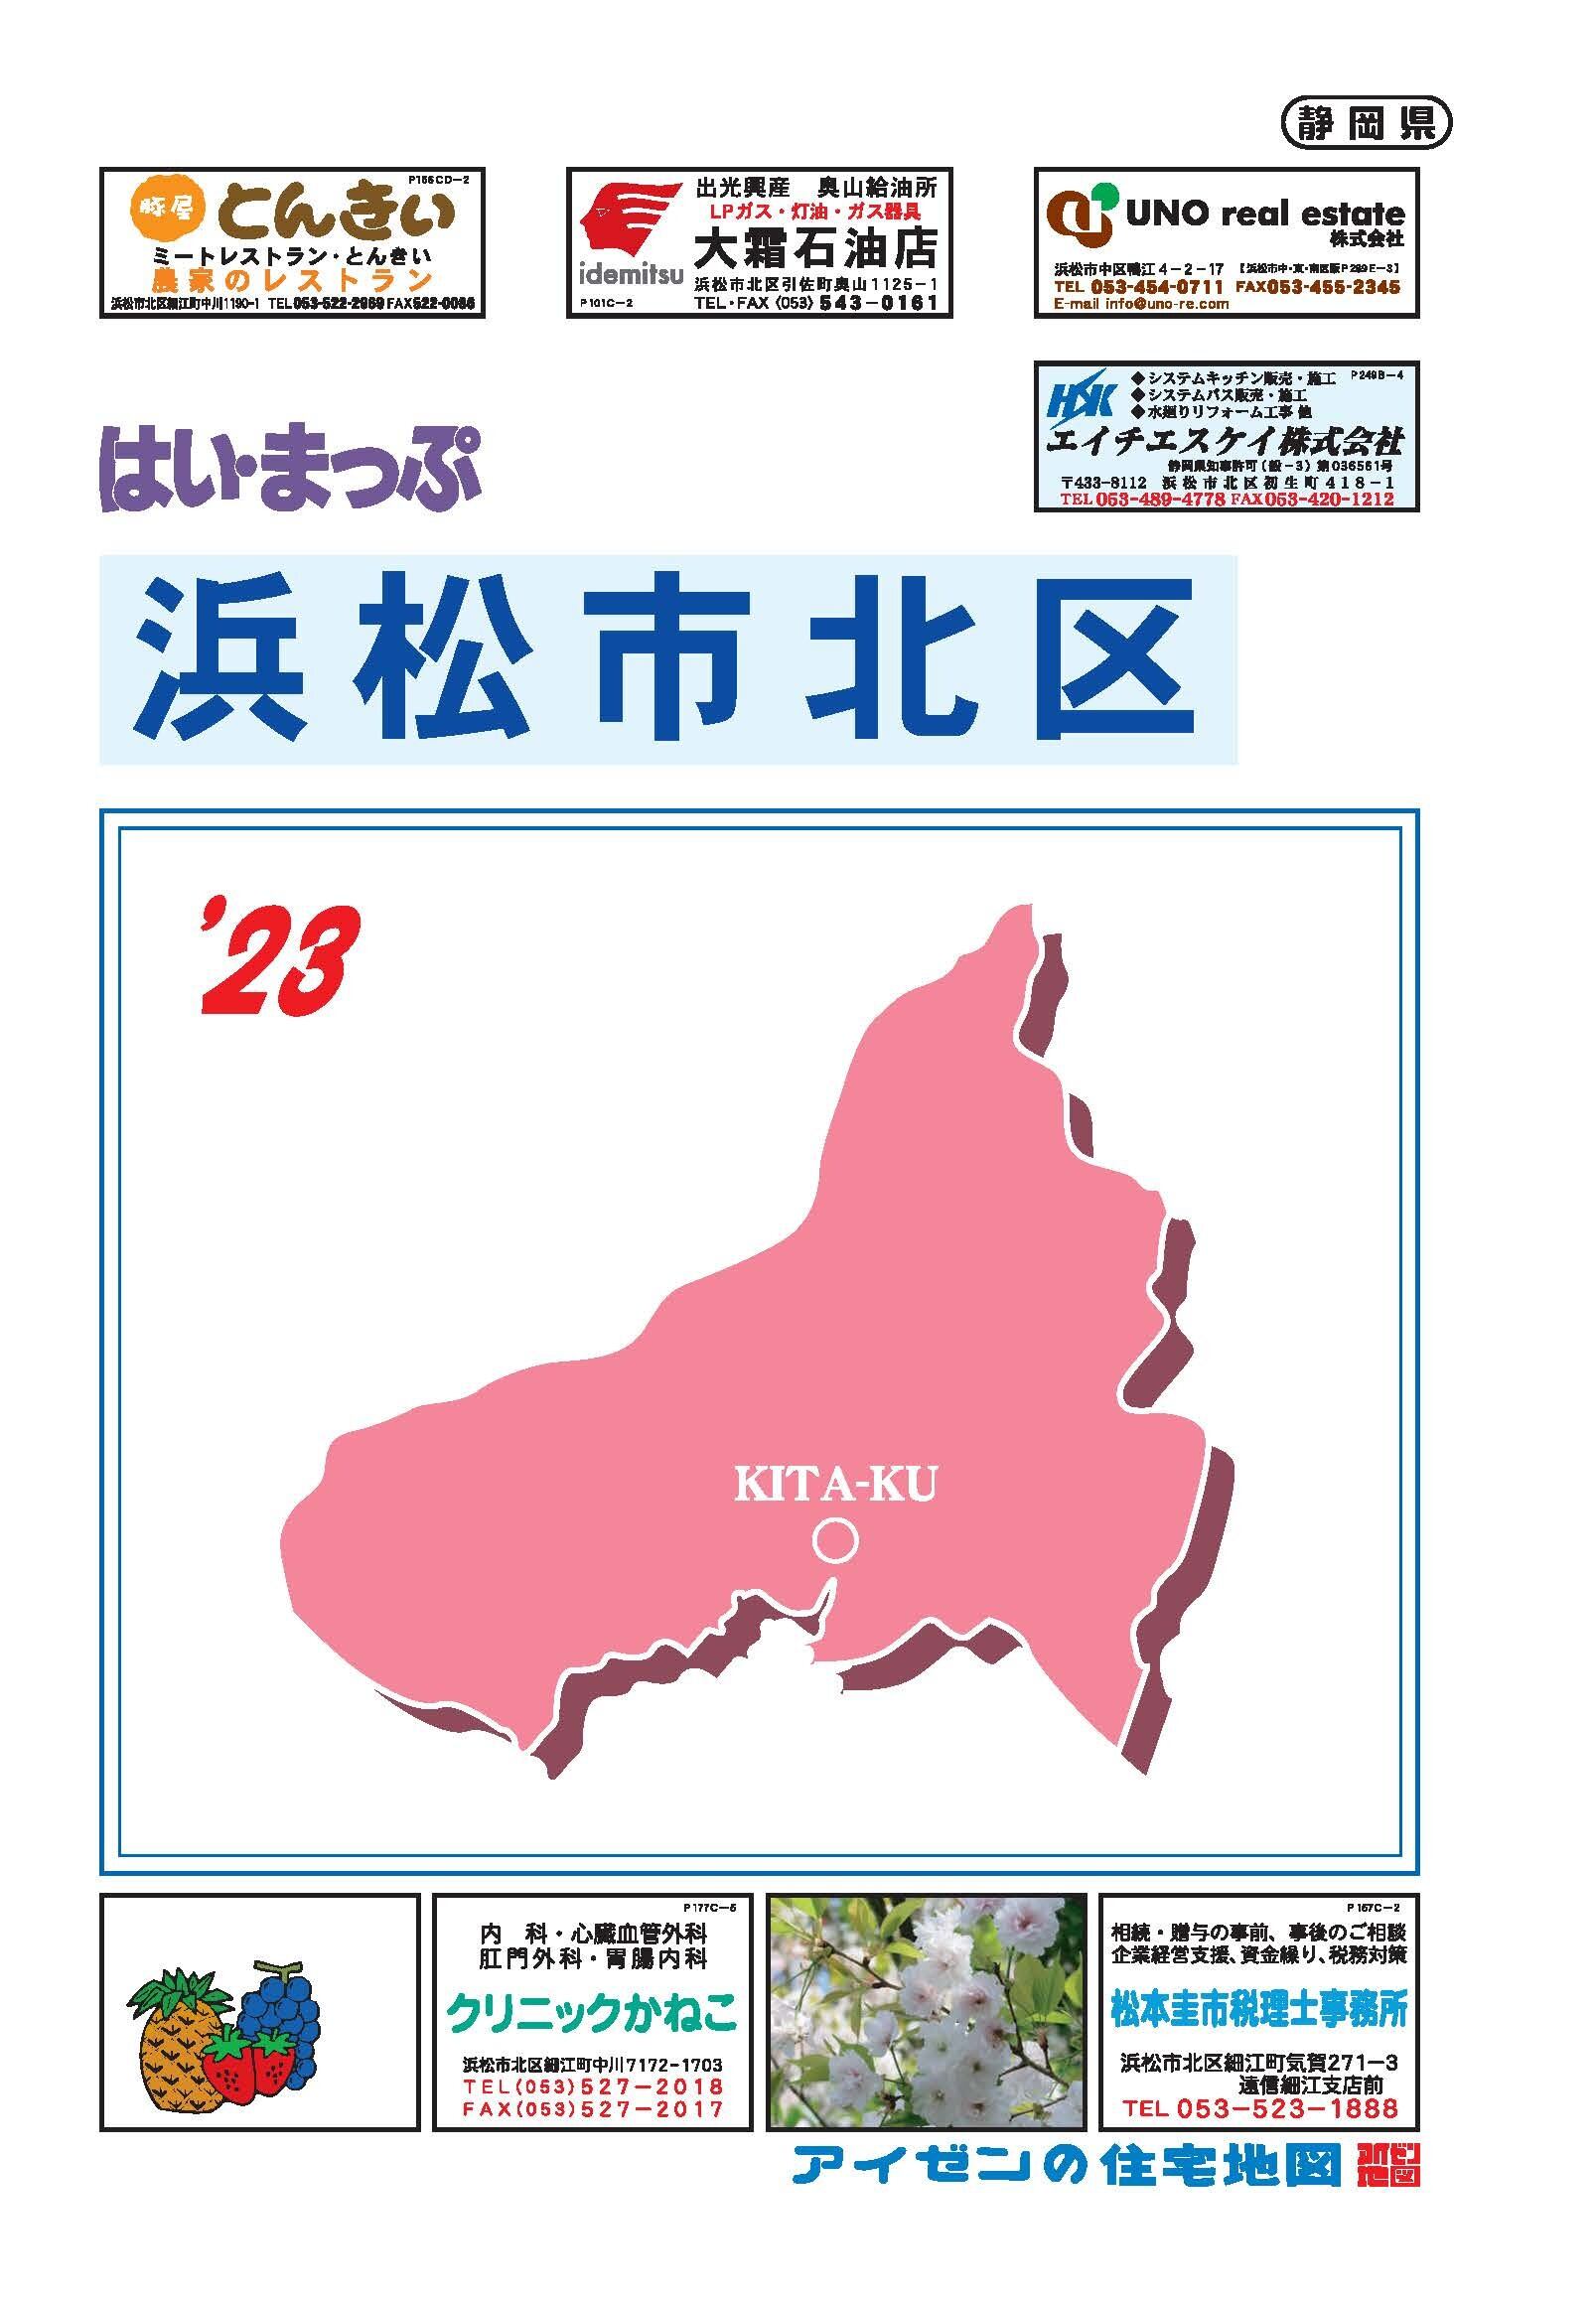 H27 はいまっぷ 天竜区③水窪・春野 住宅地図 | アイゼンonline shop